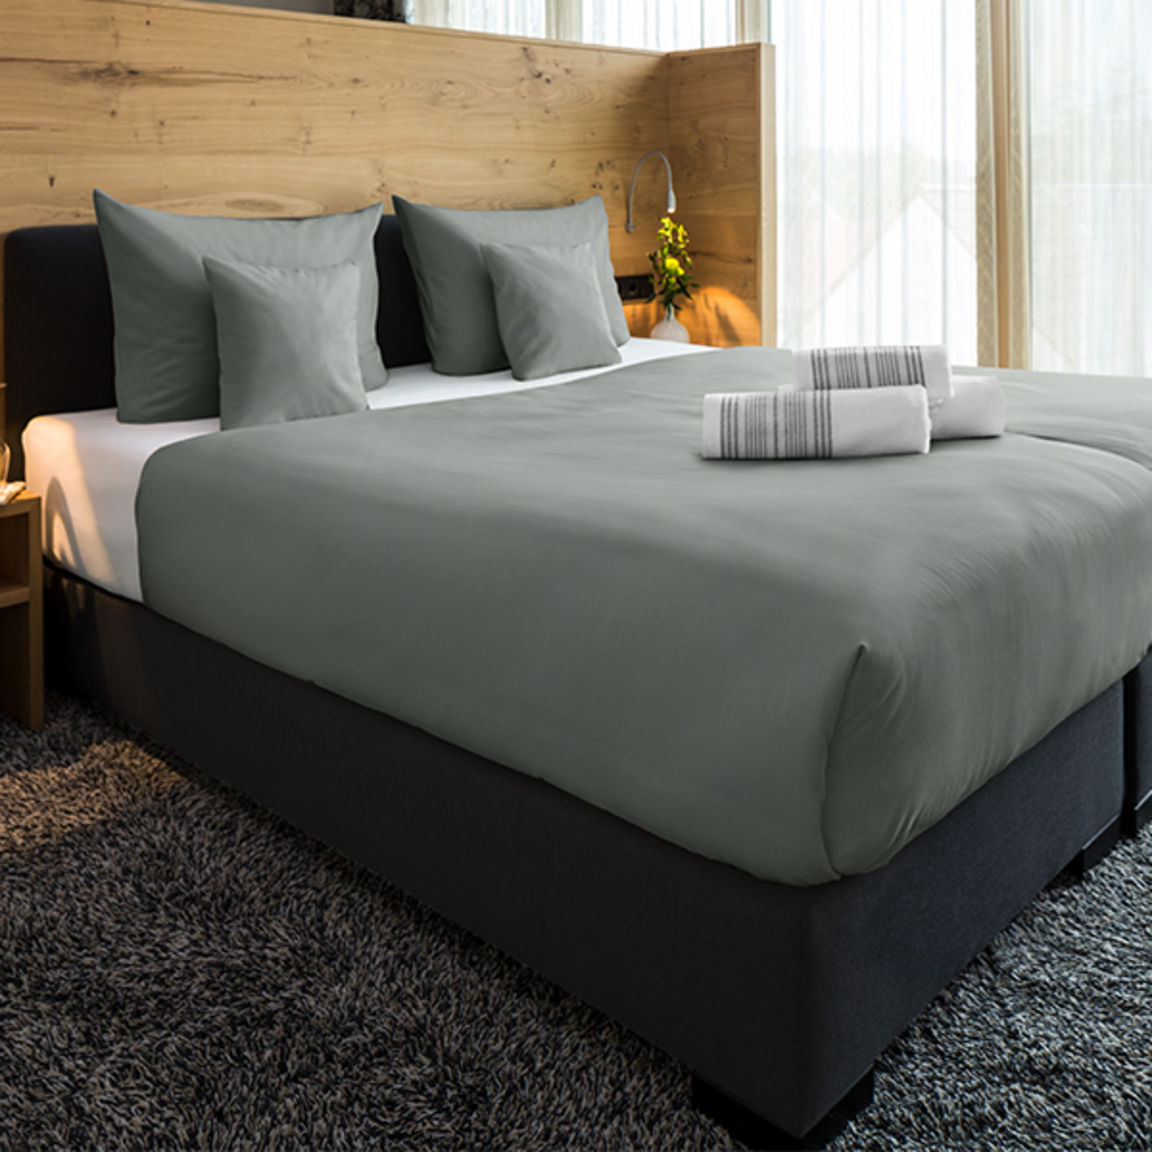 Biancheria da letto per hotel, alberghi e B&B → Acqsuita online da